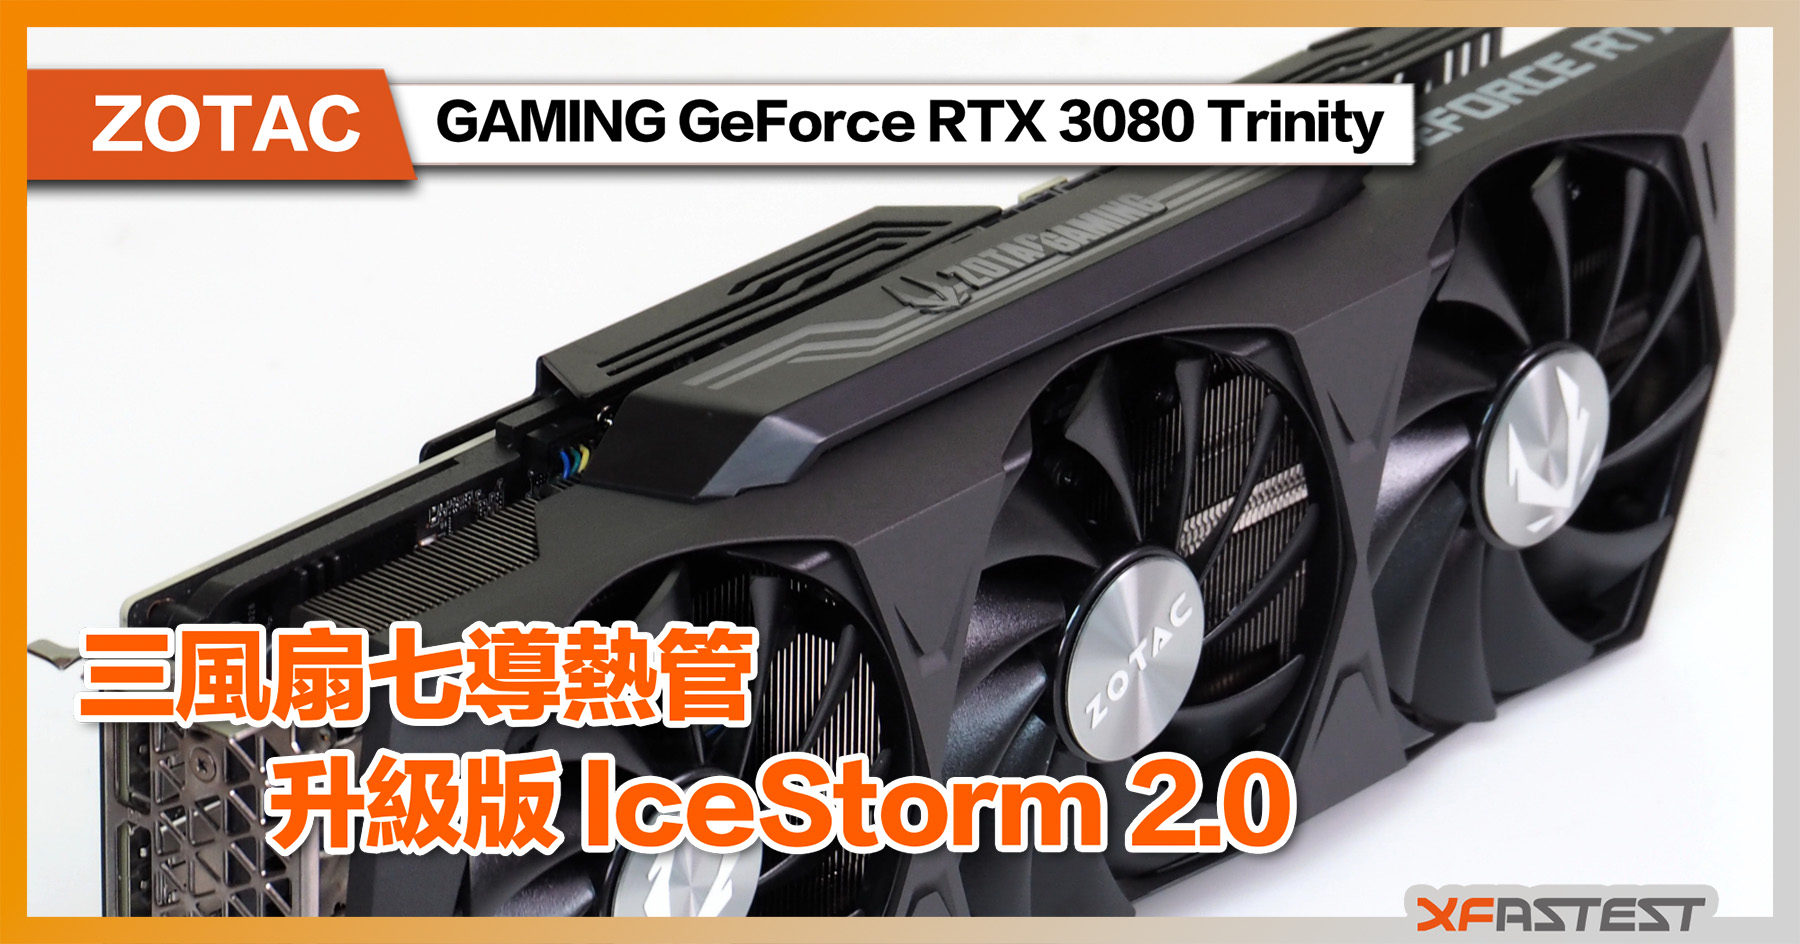 XF 開箱] 升級版IceStorm 2.0 三風扇七導熱管ZOTAC GAMING GeForce RTX